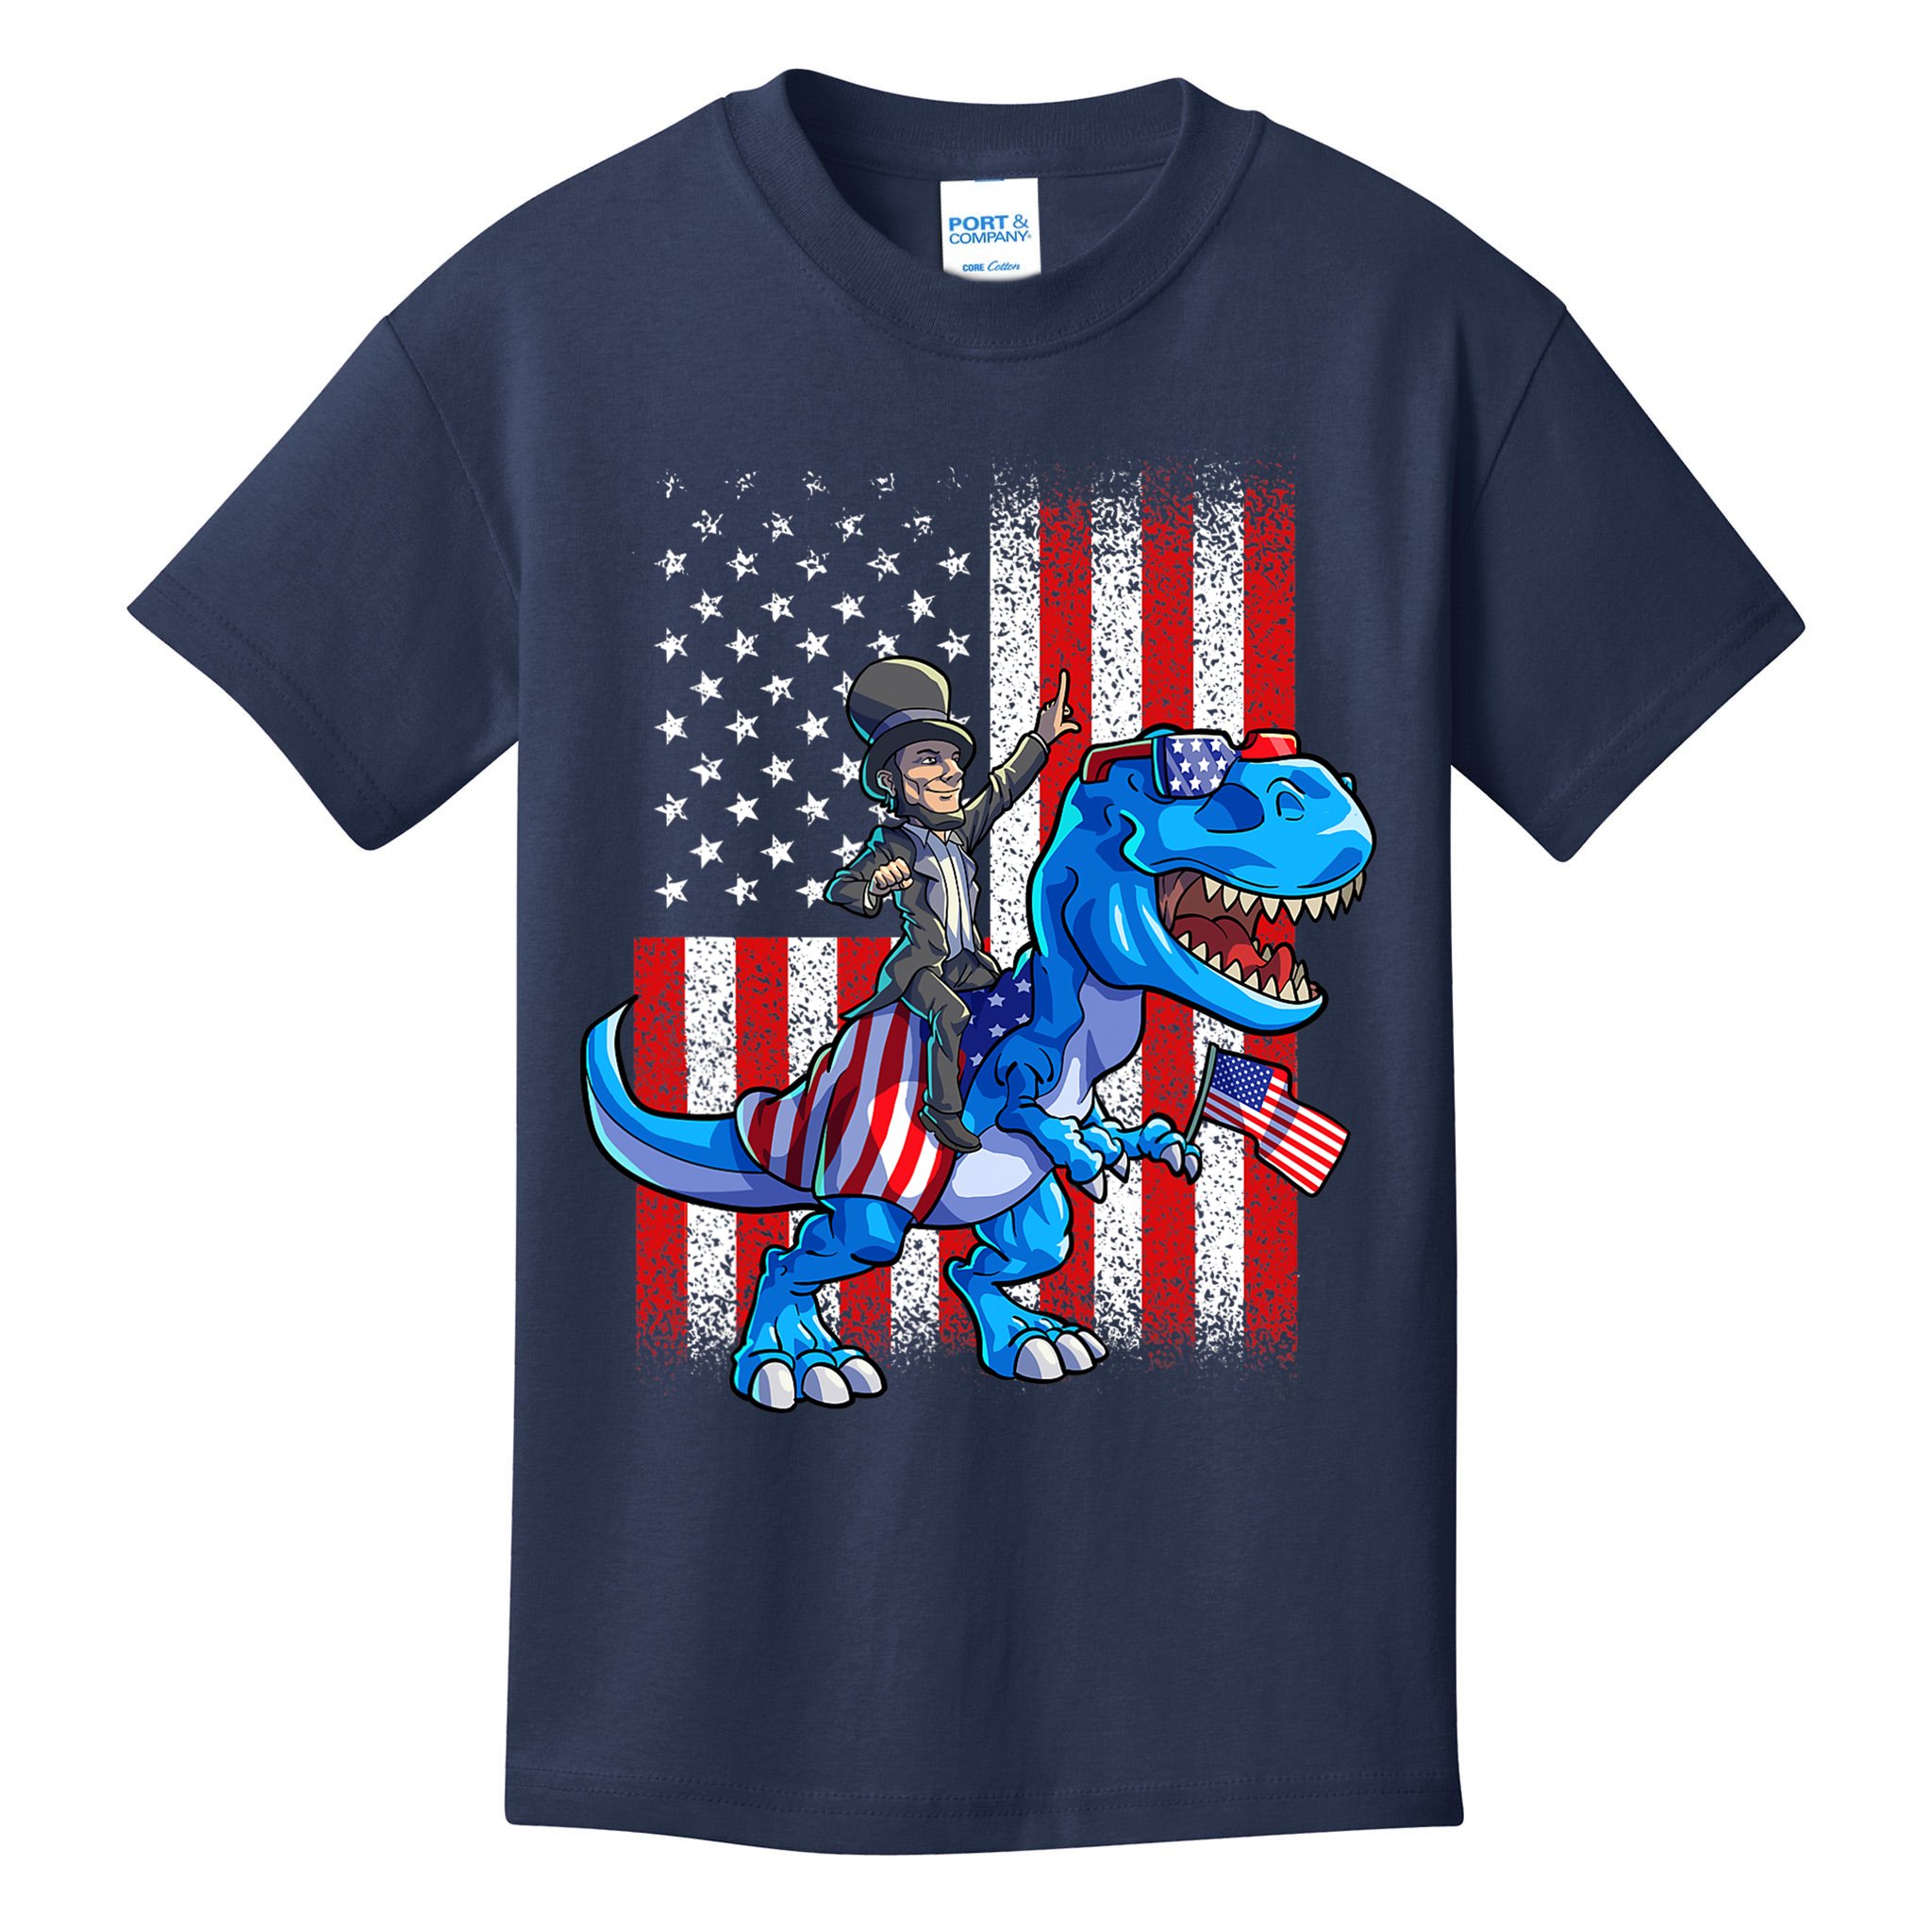 Boys American Flag Shirt, Boys Dinosaur Shirt, Fishing Pole Shirt